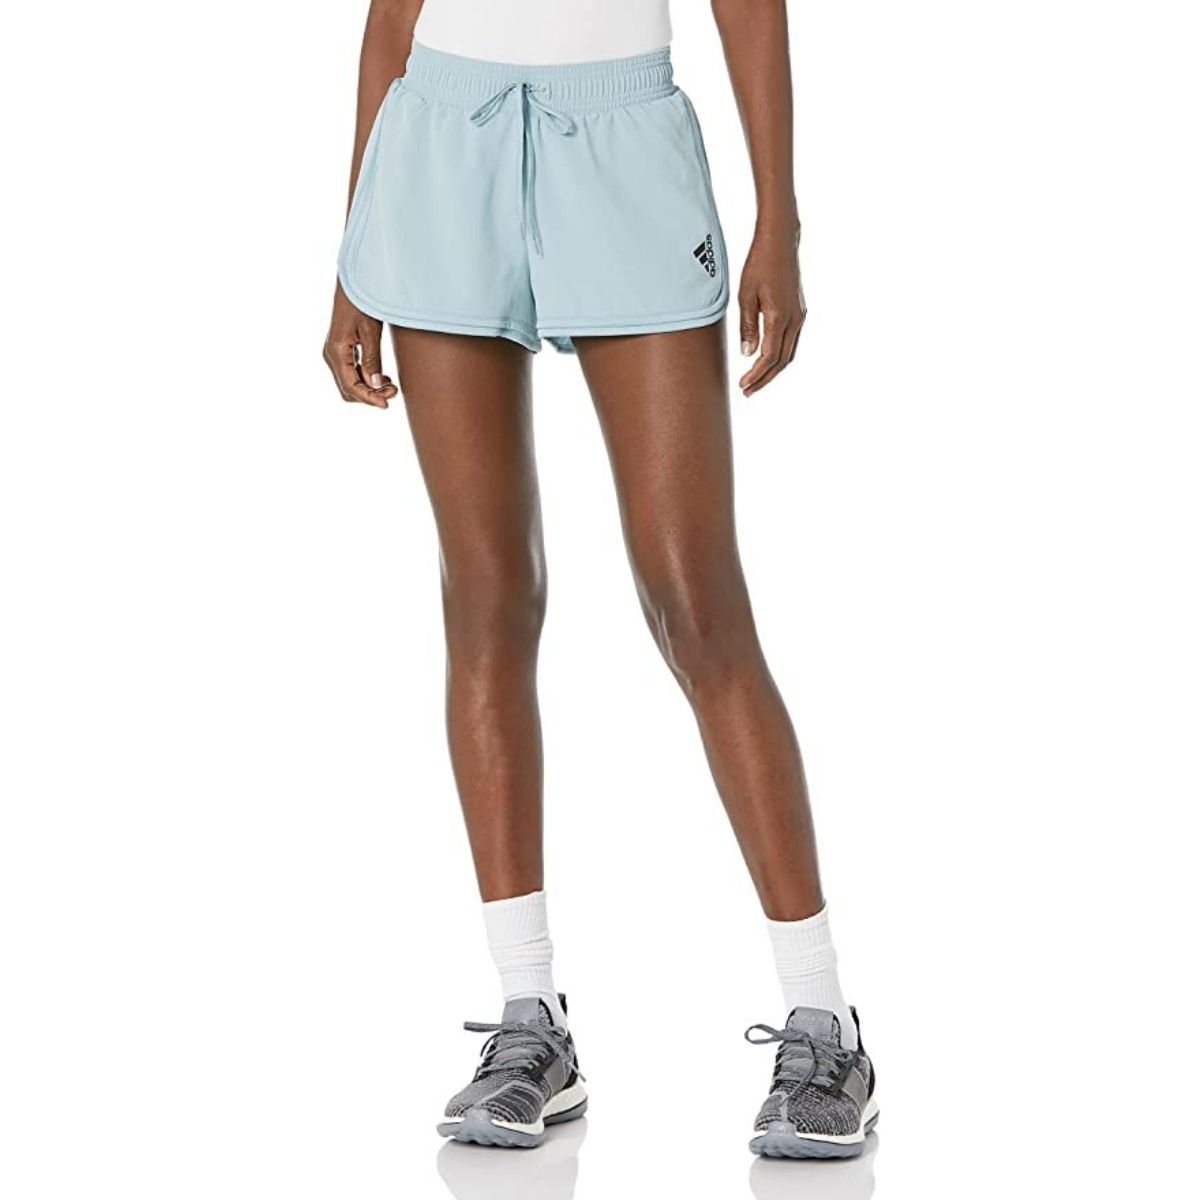 The Best Tennis Shorts Options: Adidas Women's Tennis Shorts